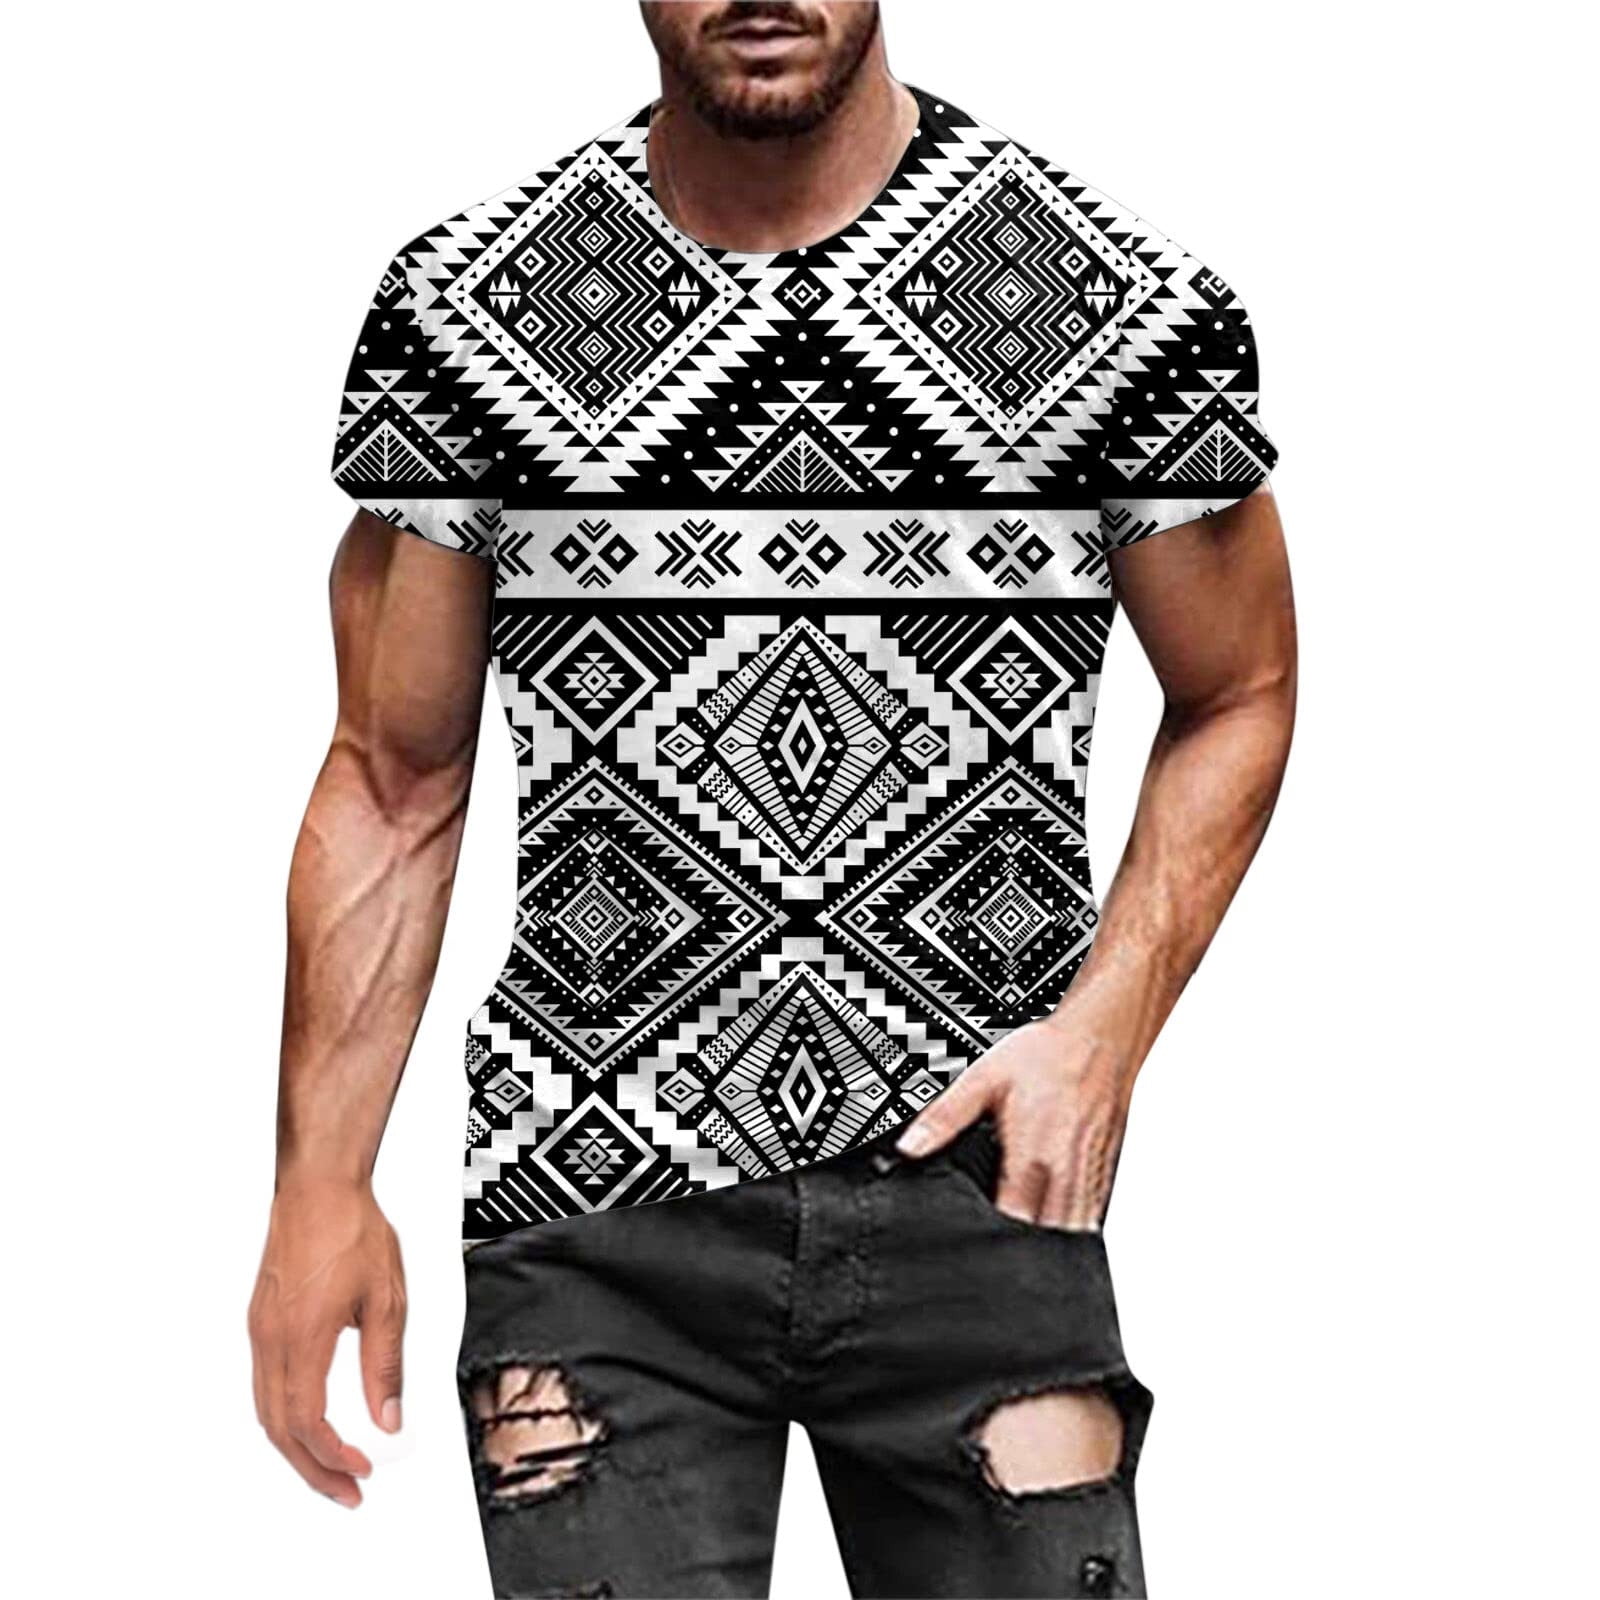 qucoqpe Men's 3D Pattern Printed Short Sleeve T-Shirts Casual Summer ...